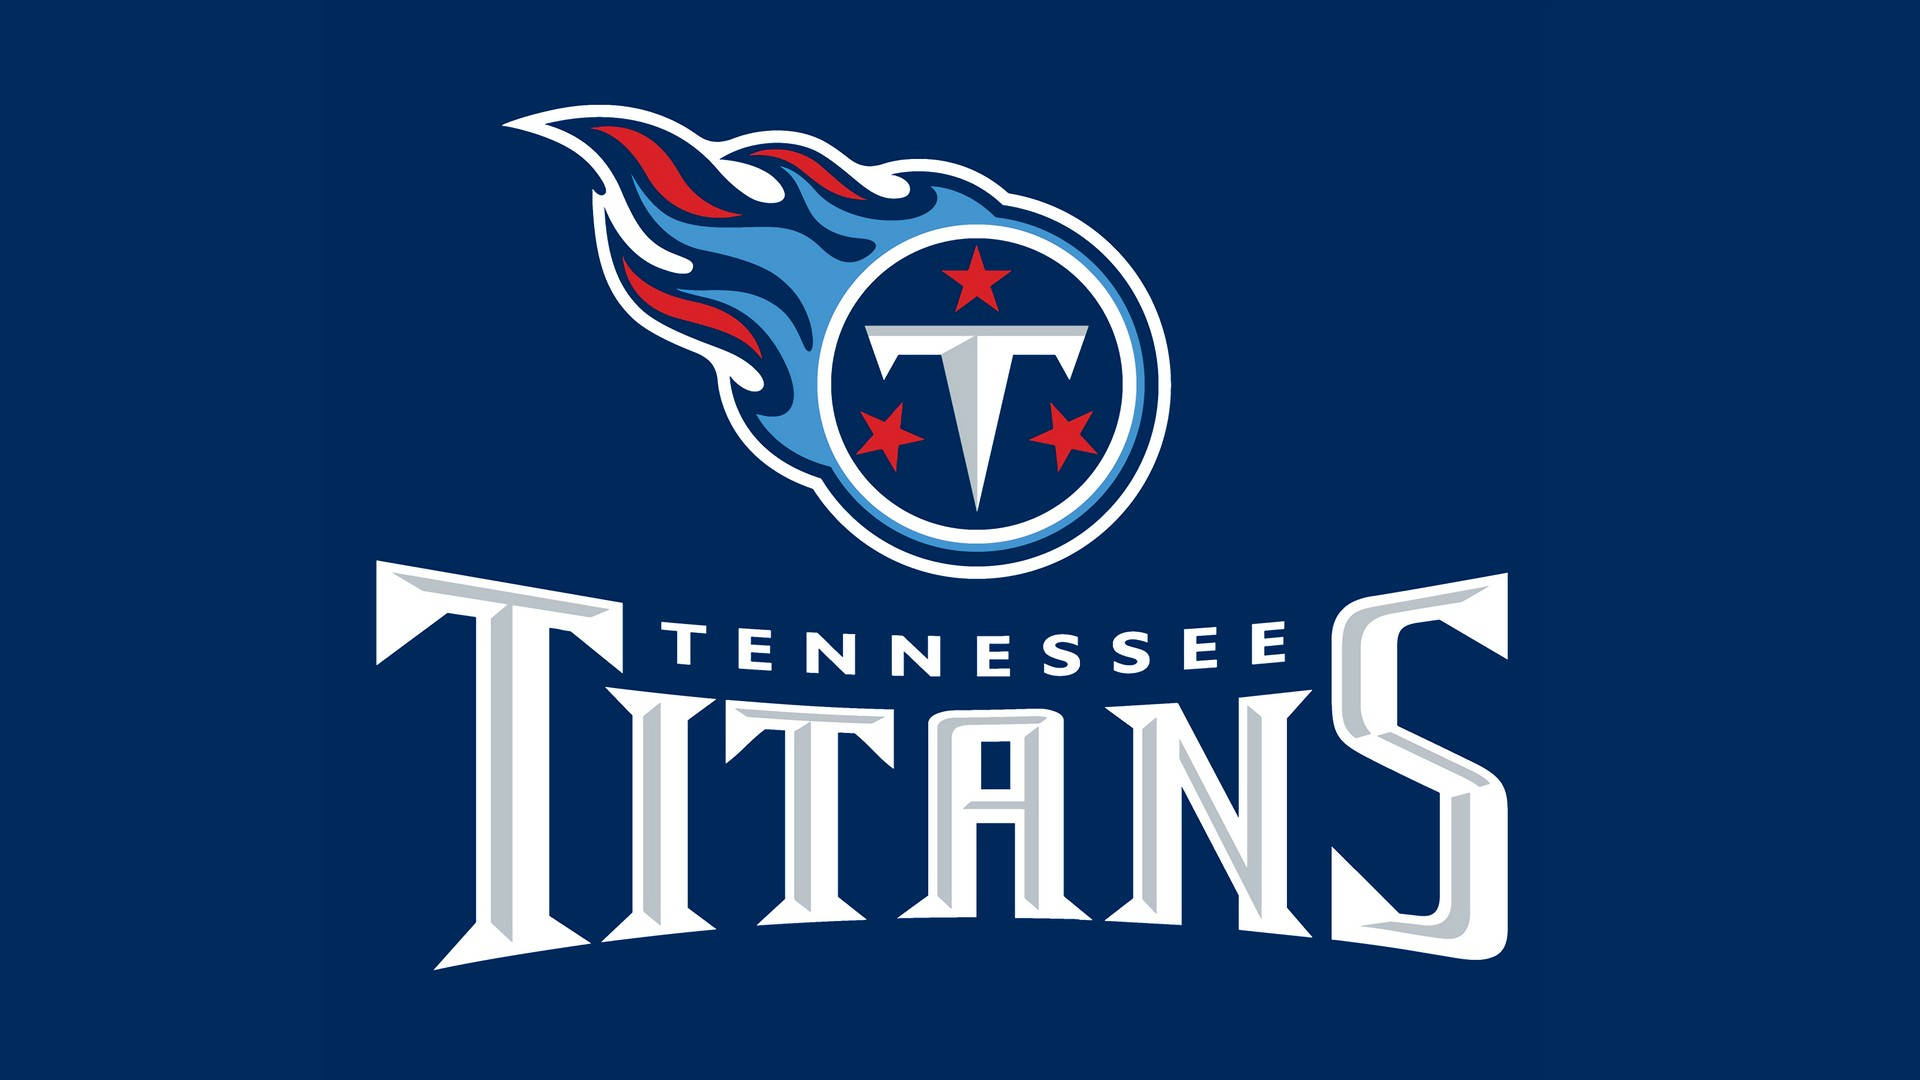 Fondods De Tennessee Titans